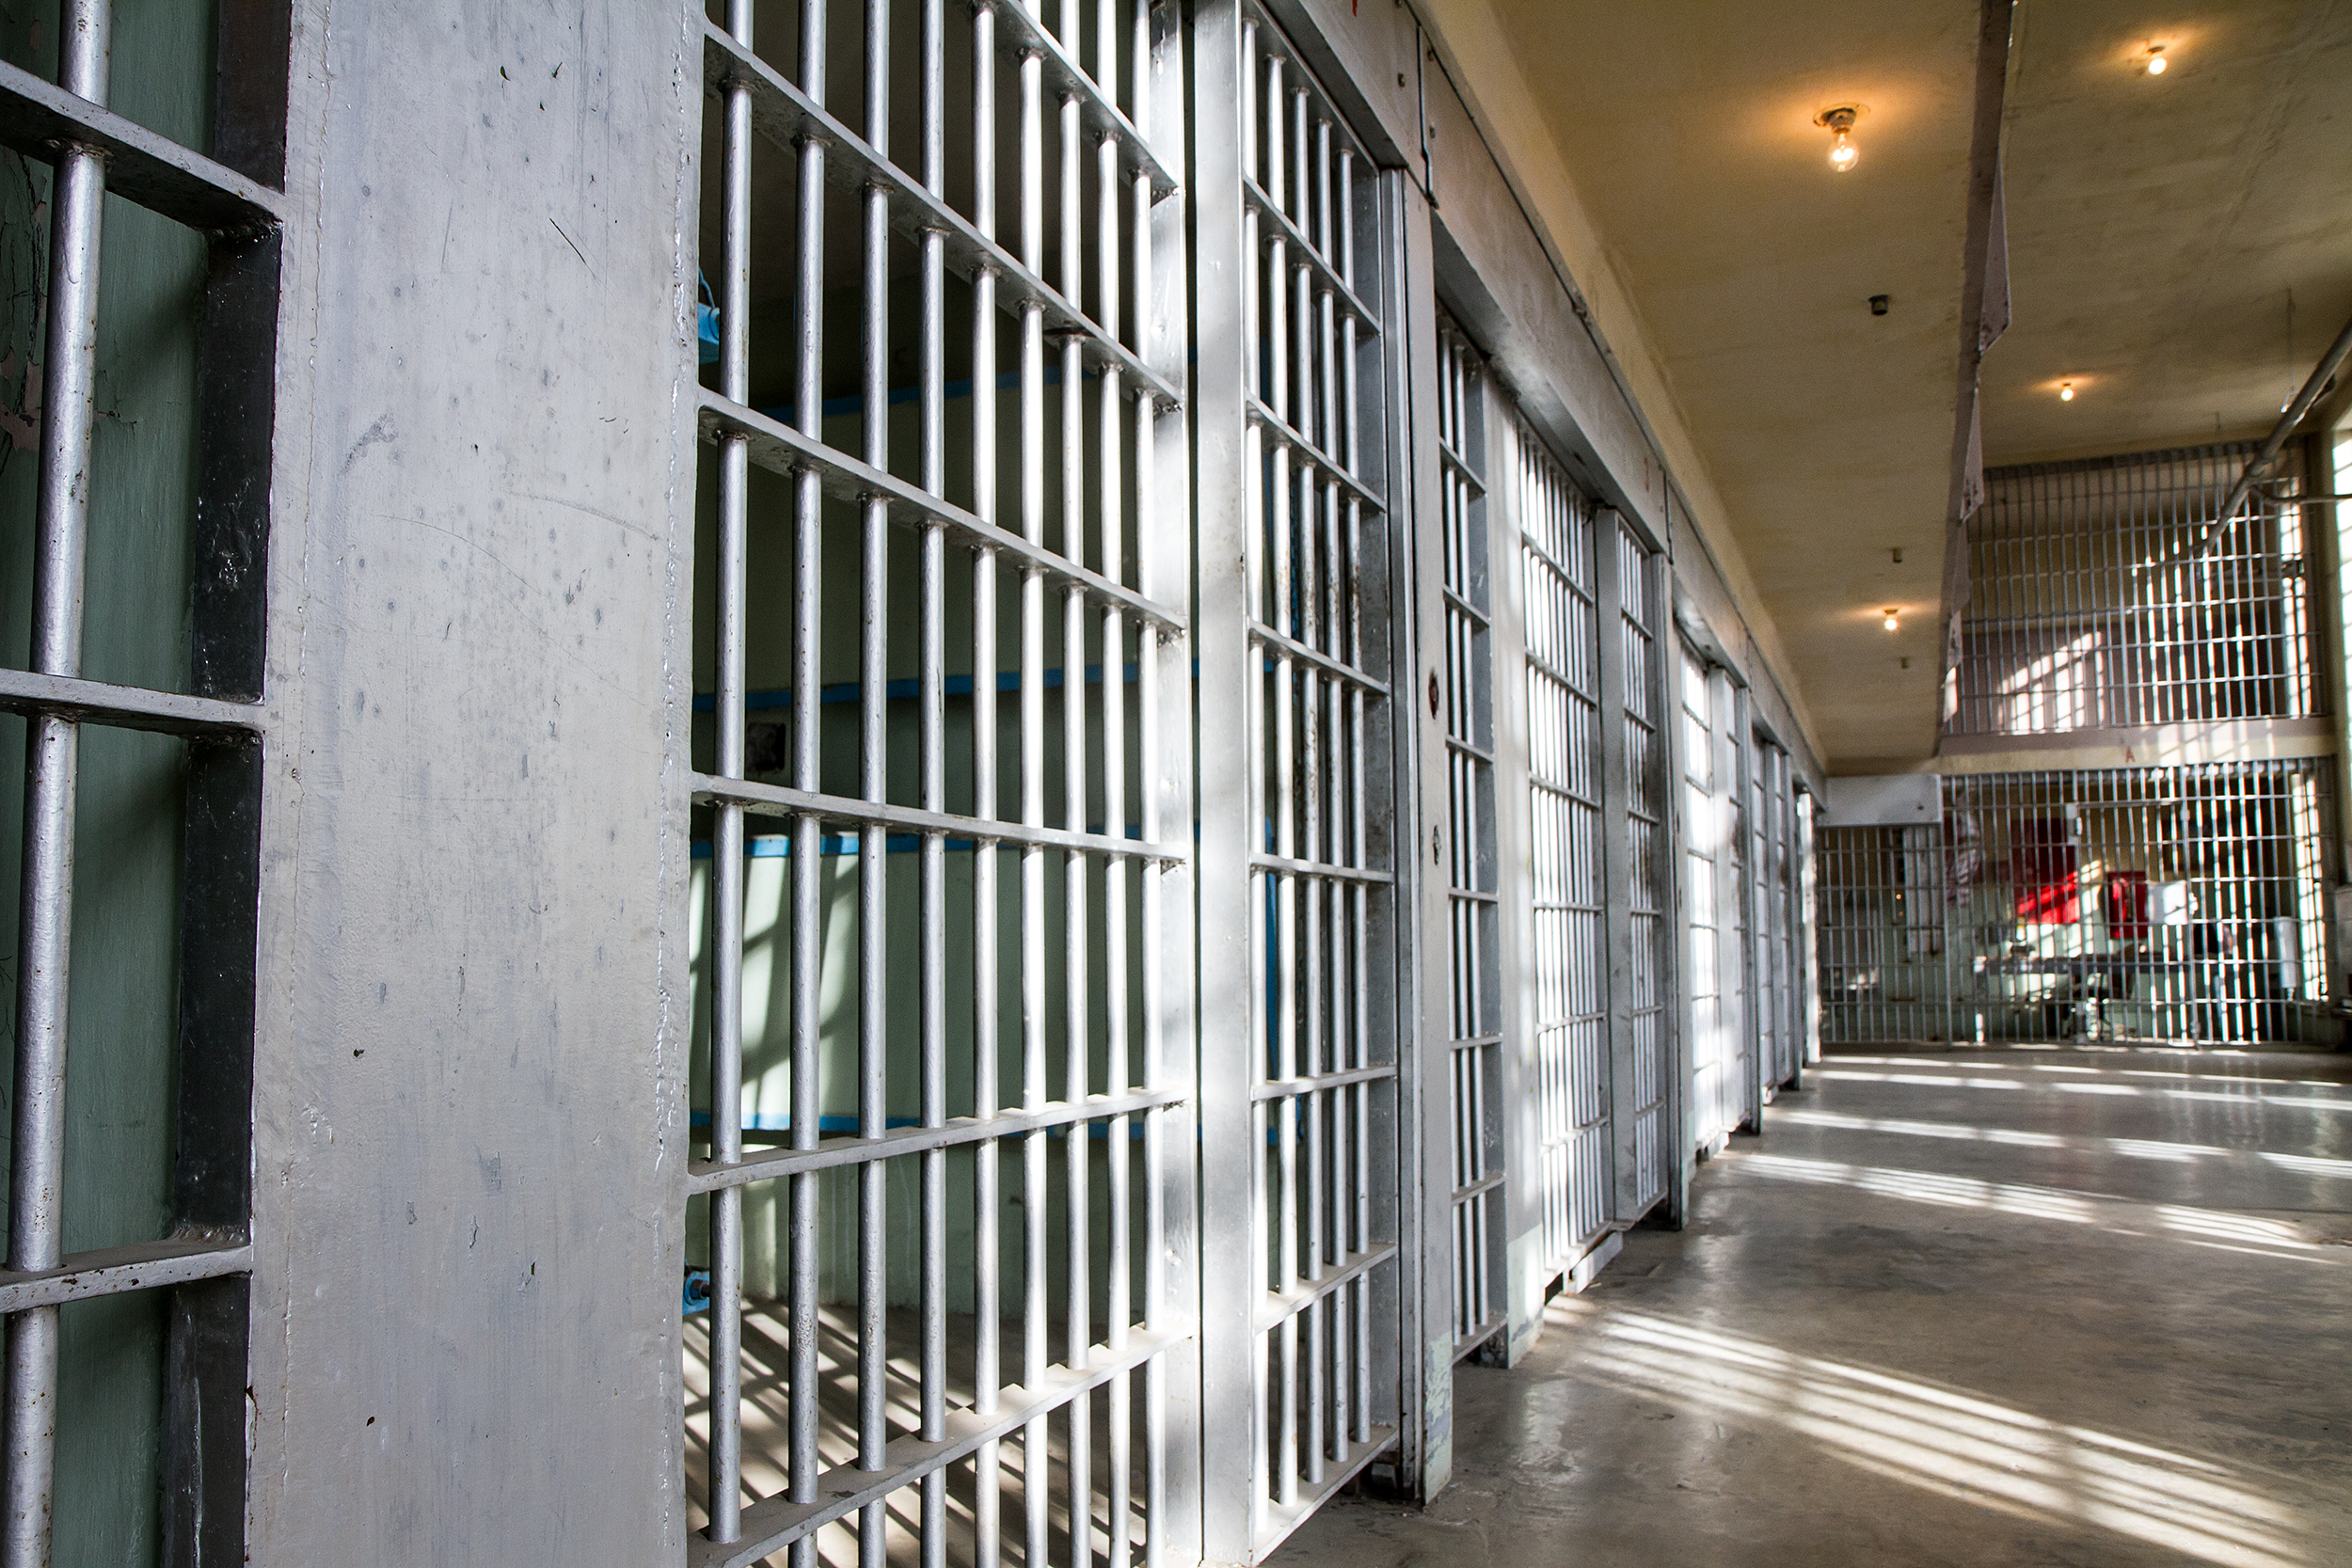 Prisoner Kills Fellow Inmate Who Led Child Pornography Ring